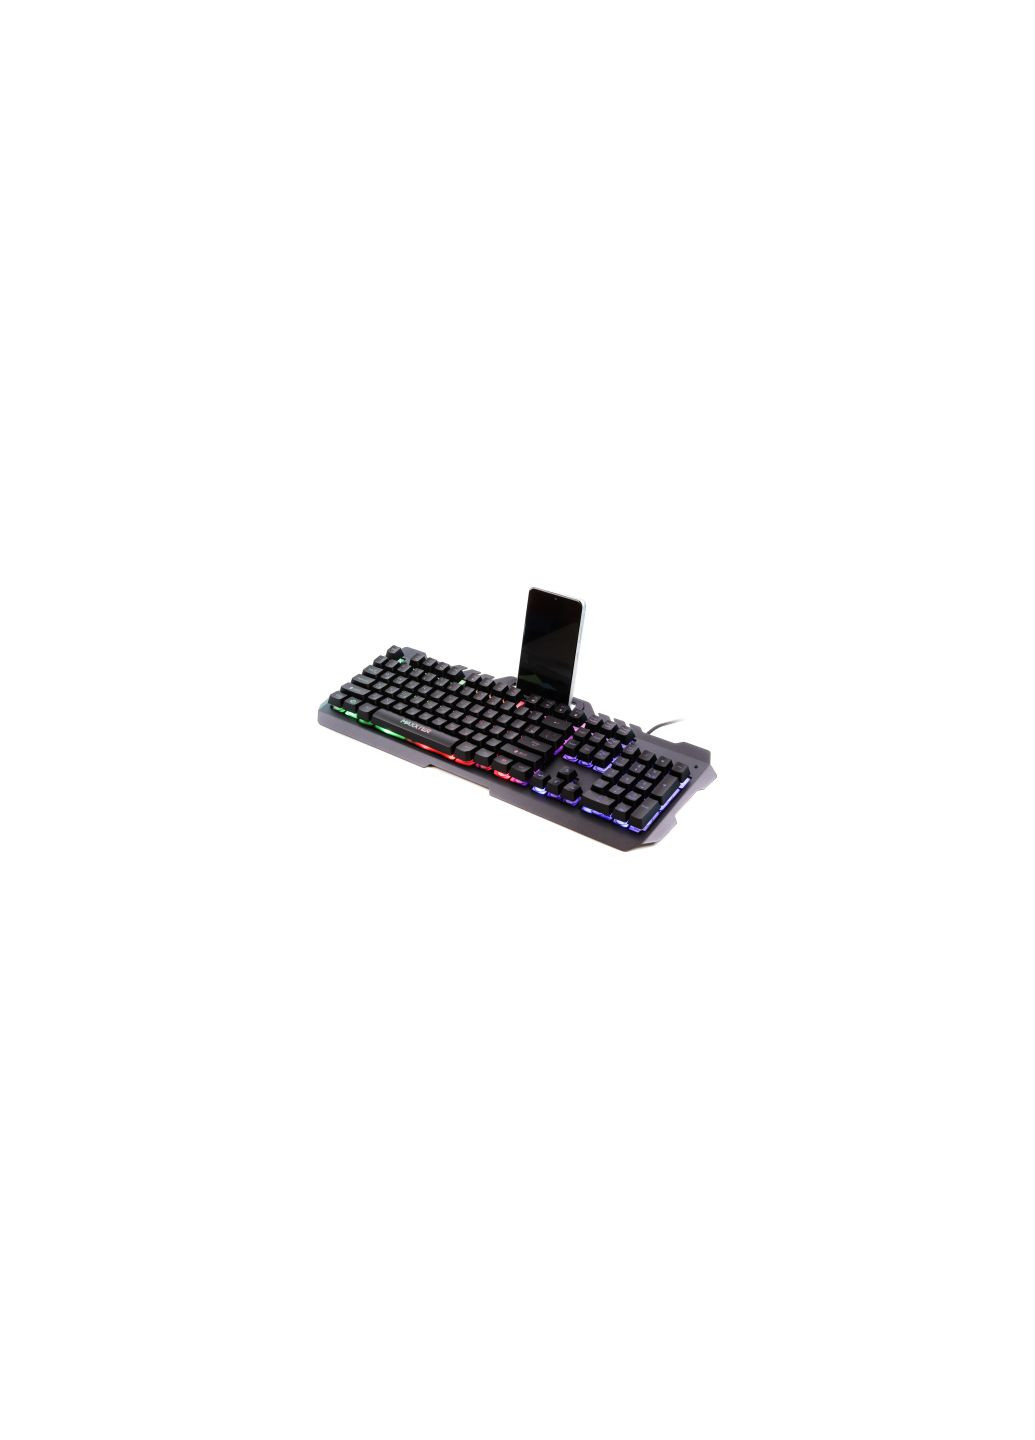 Клавиатура KBGUML-01-UA USB Black (KBG-UML-01-UA) Maxxter kbg-uml-01-ua usb black (276707481)